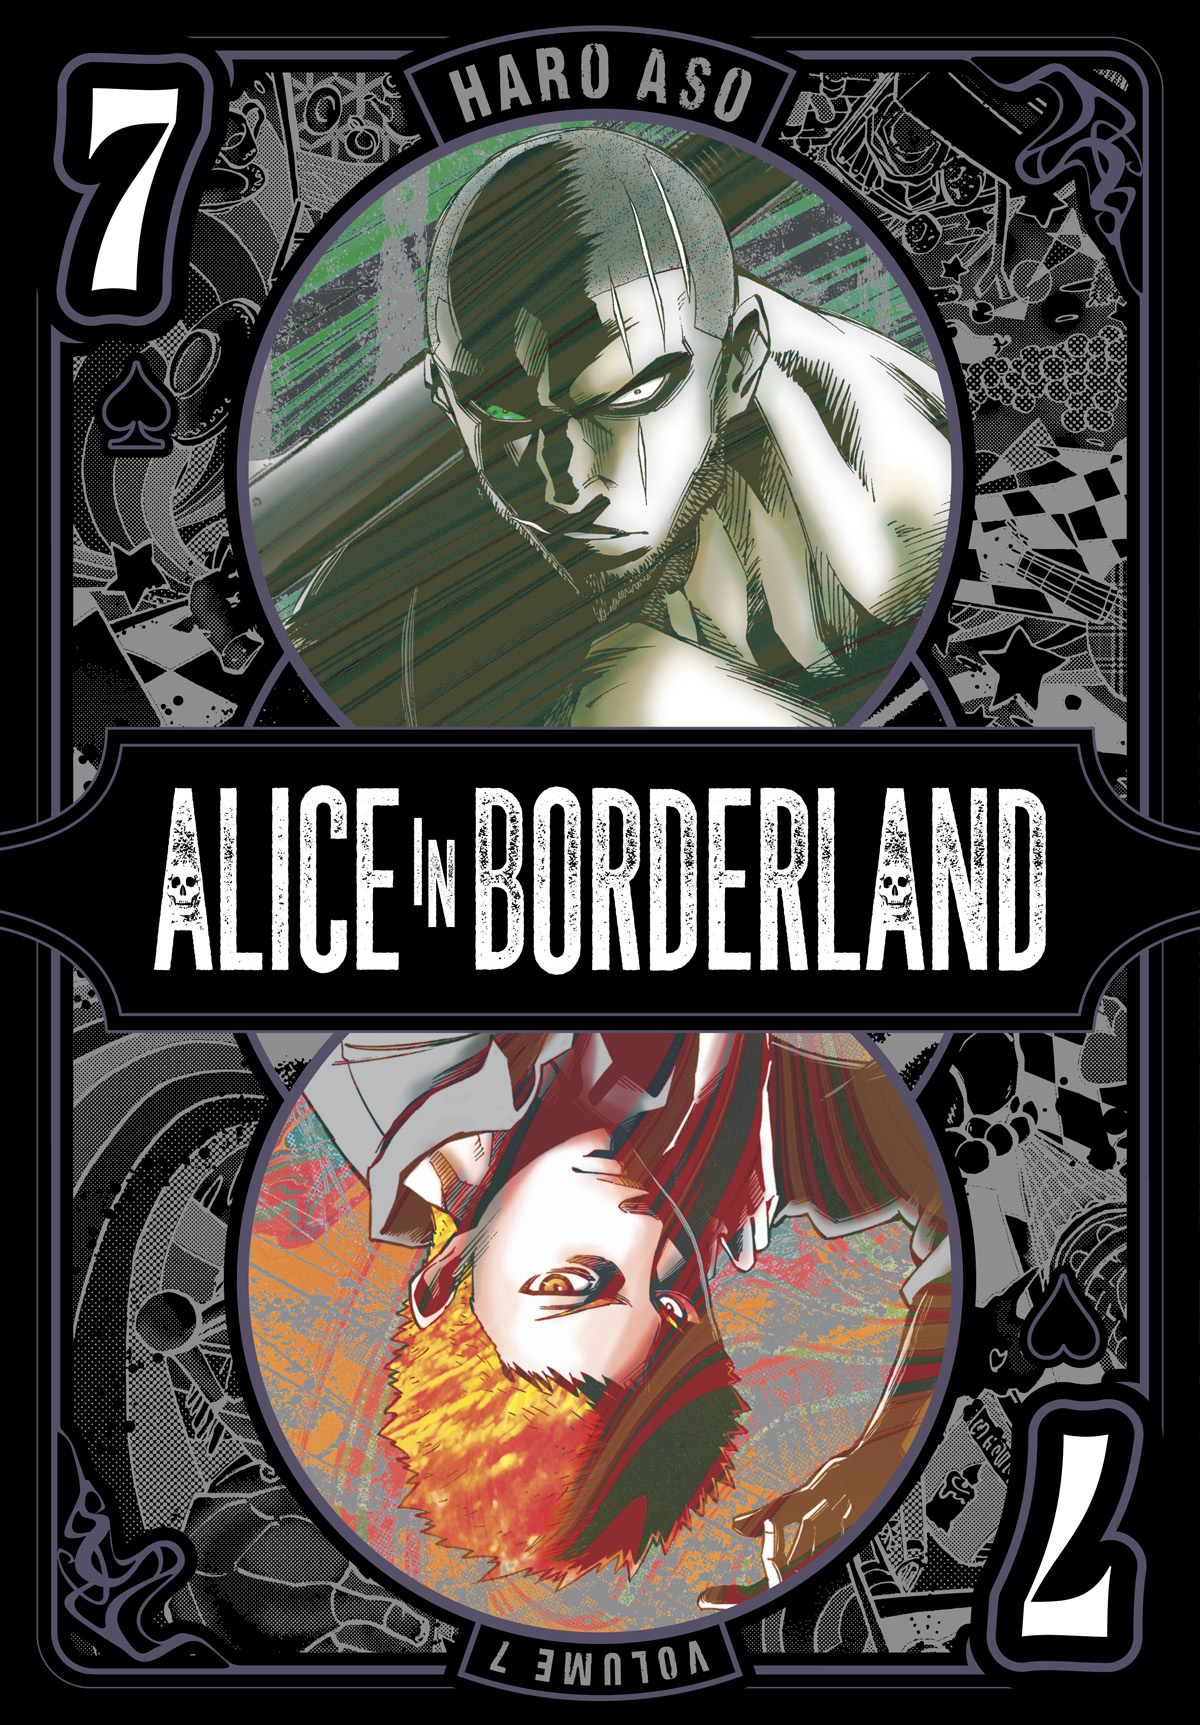 Alice In Borderland Manga Volume 7 (Mature)